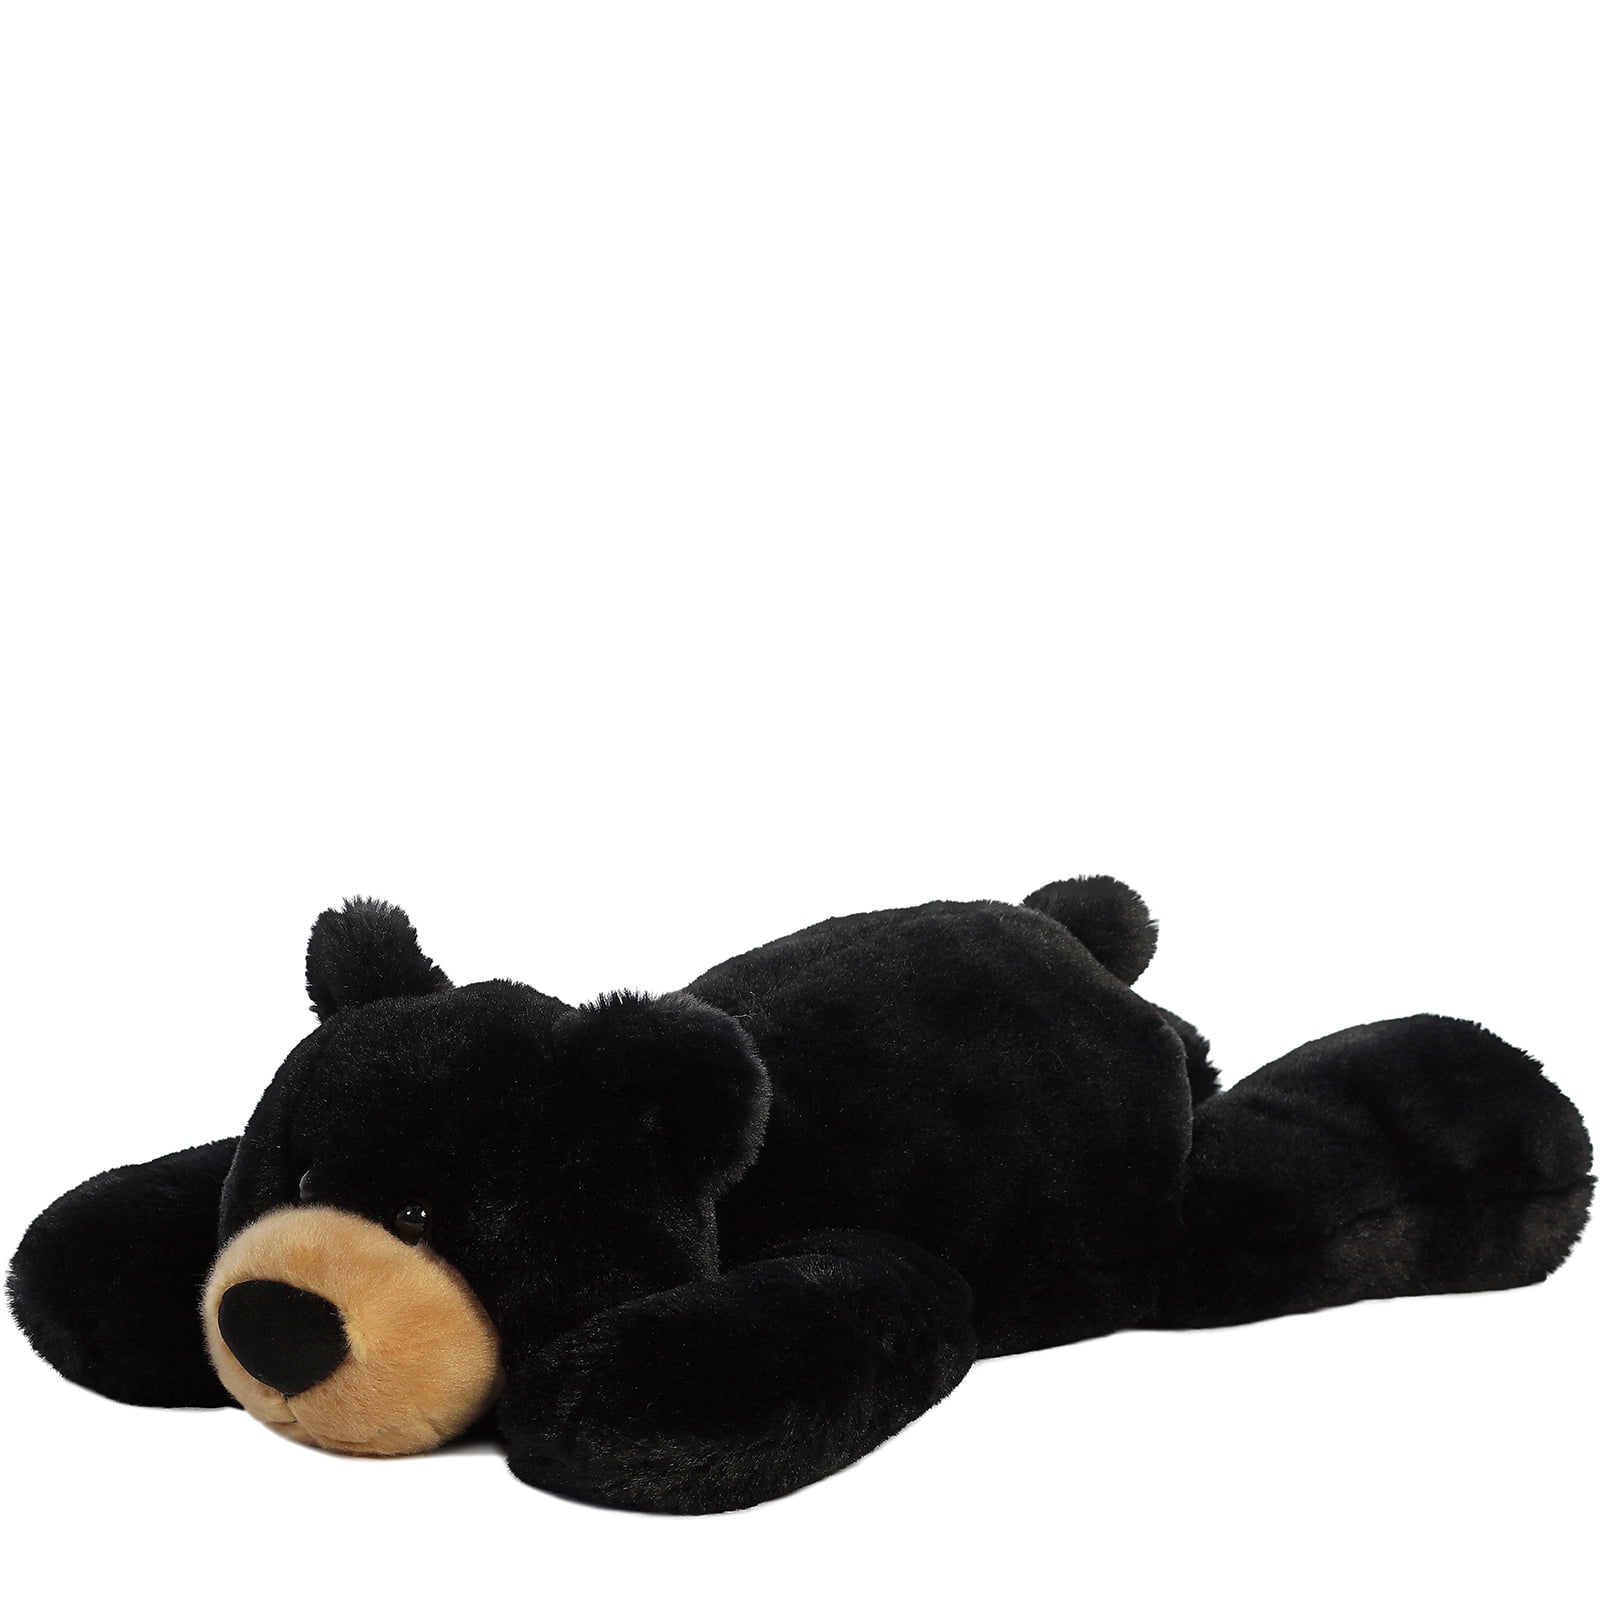 TheMogan 12" Baby Huggawug Laying Bear Zoo Soft Plush Stuffed Animal Toy Black 